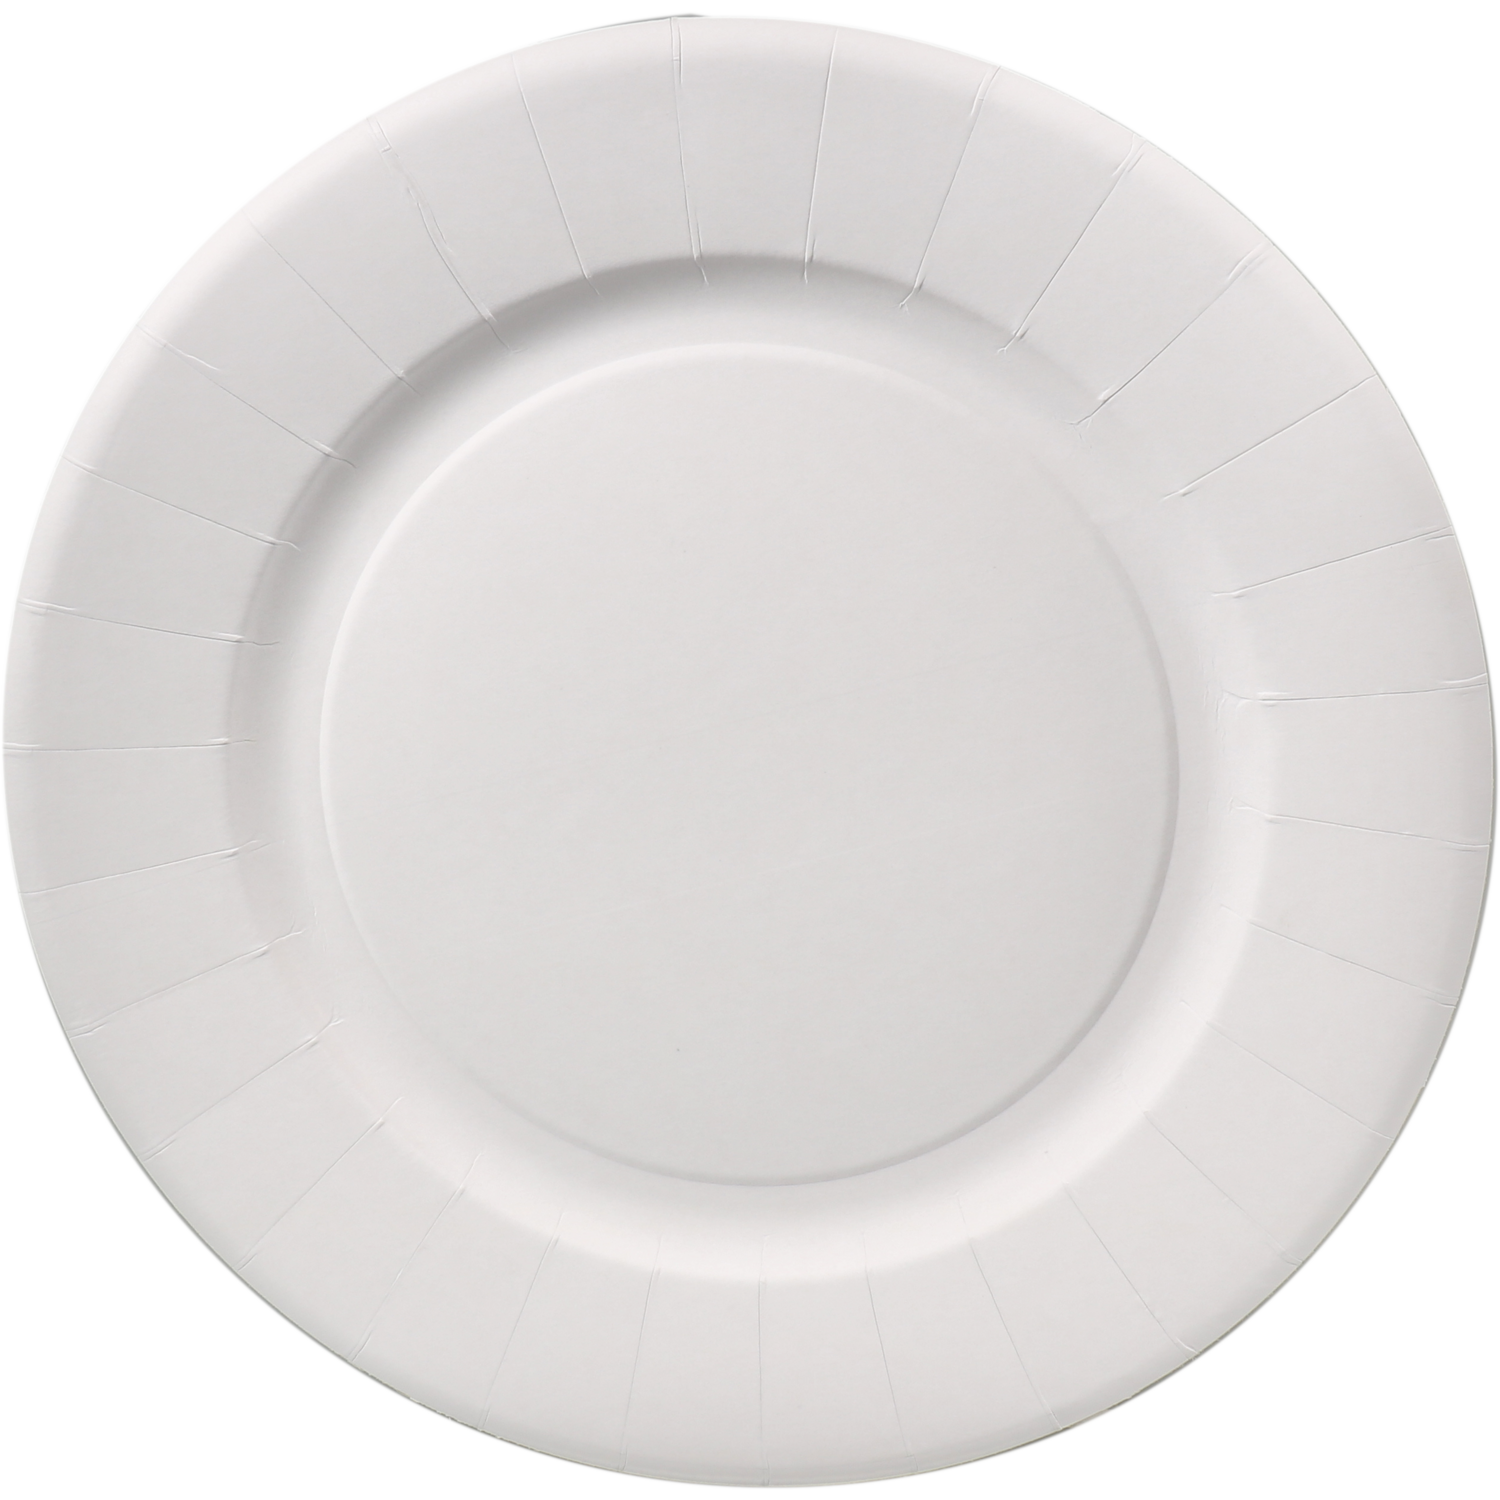 Biodore Plate, round, 1 compartment, cardboard, Ø290mm, white 1